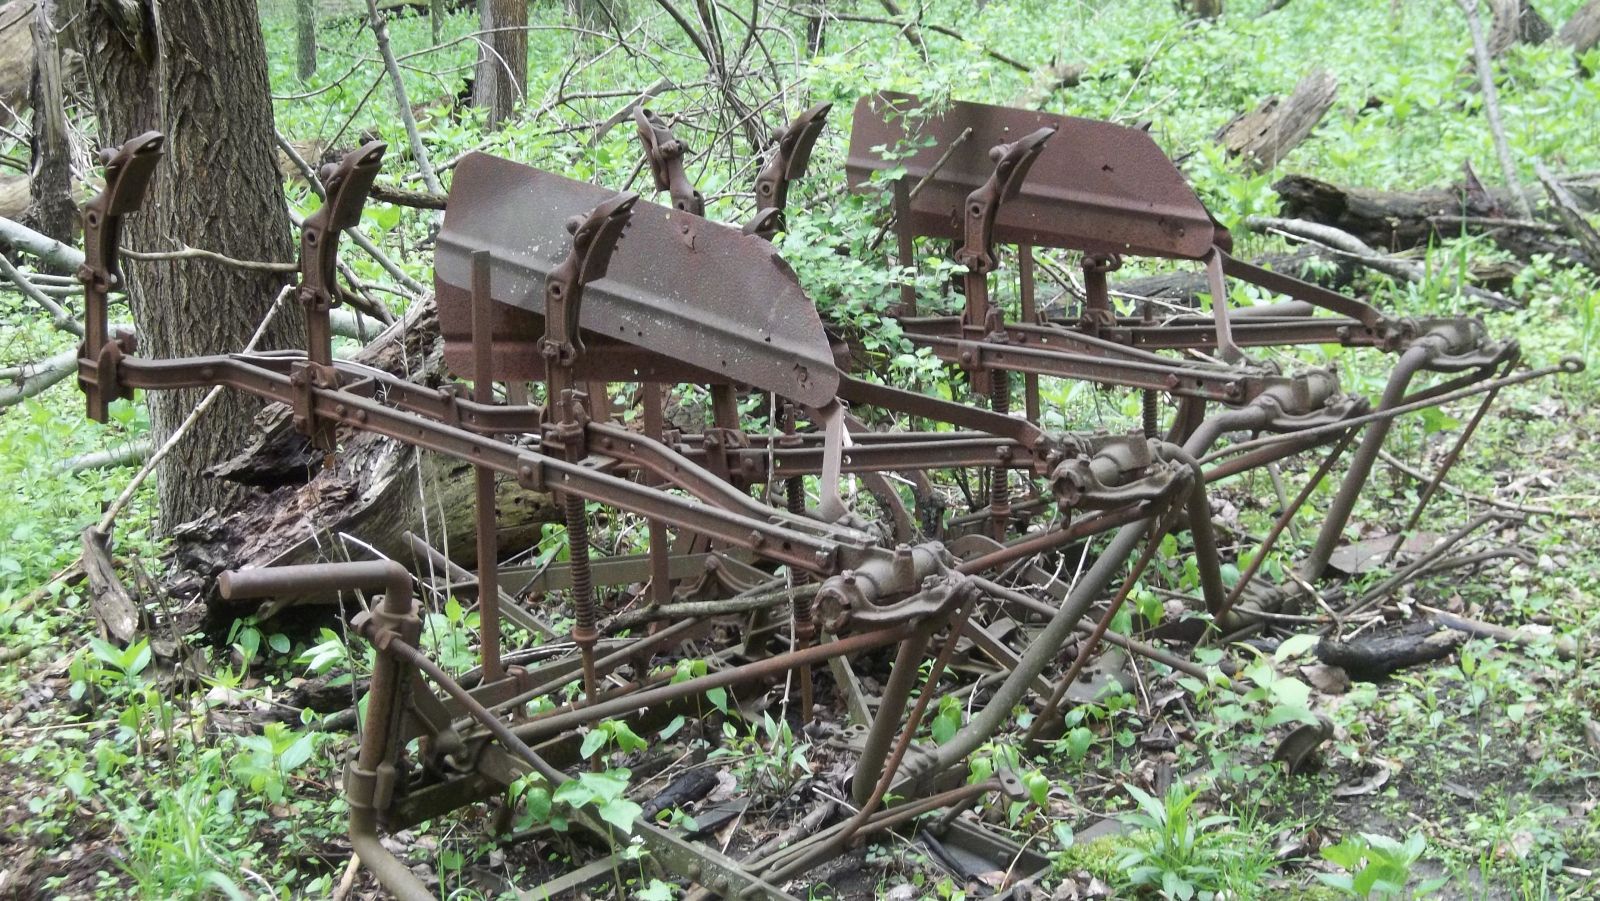 old farm machinery